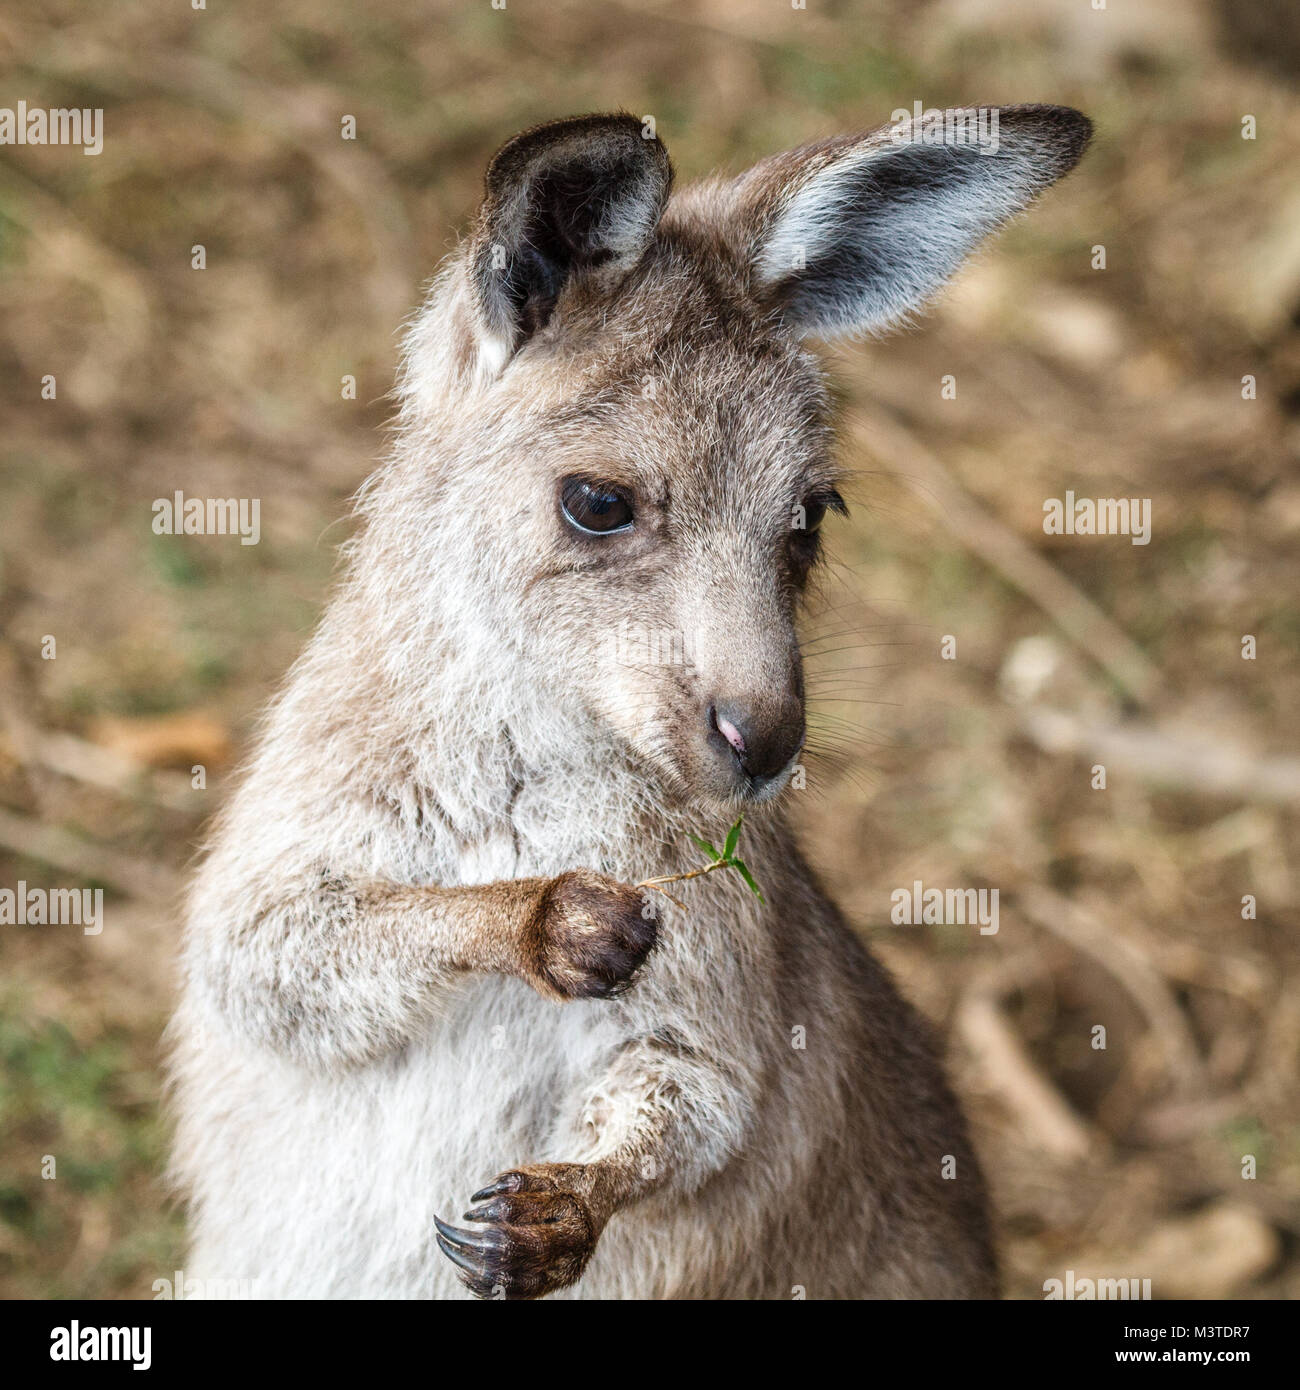 Cute grey kangaroo joey, Queensland, Australia. Portrait. Square image. Stock Photo